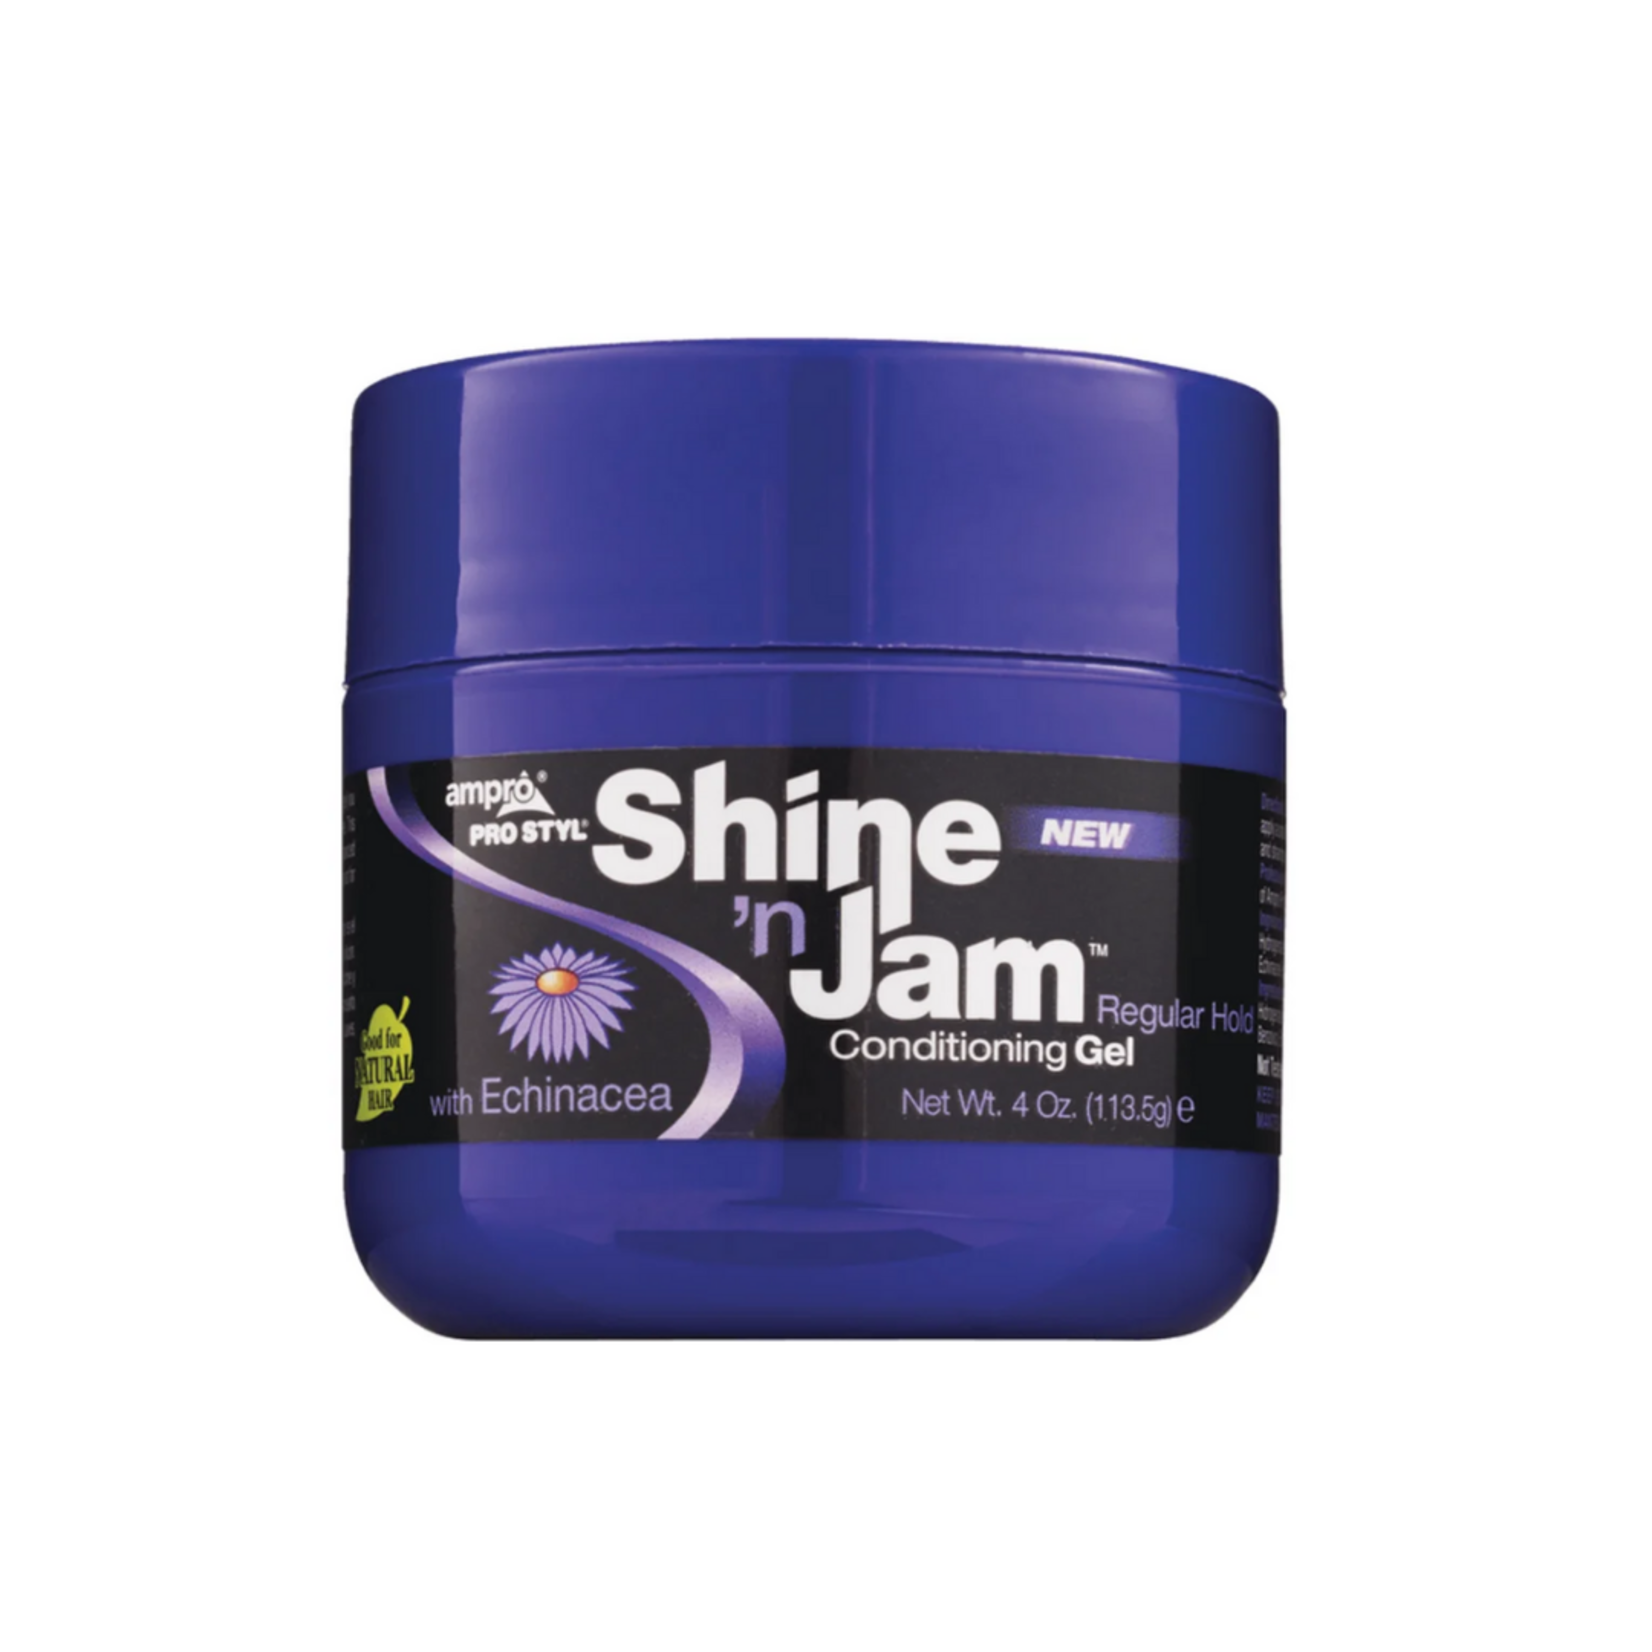 Ampro Style Shine n Jam Conditioning Gel With Echinacea 4oz